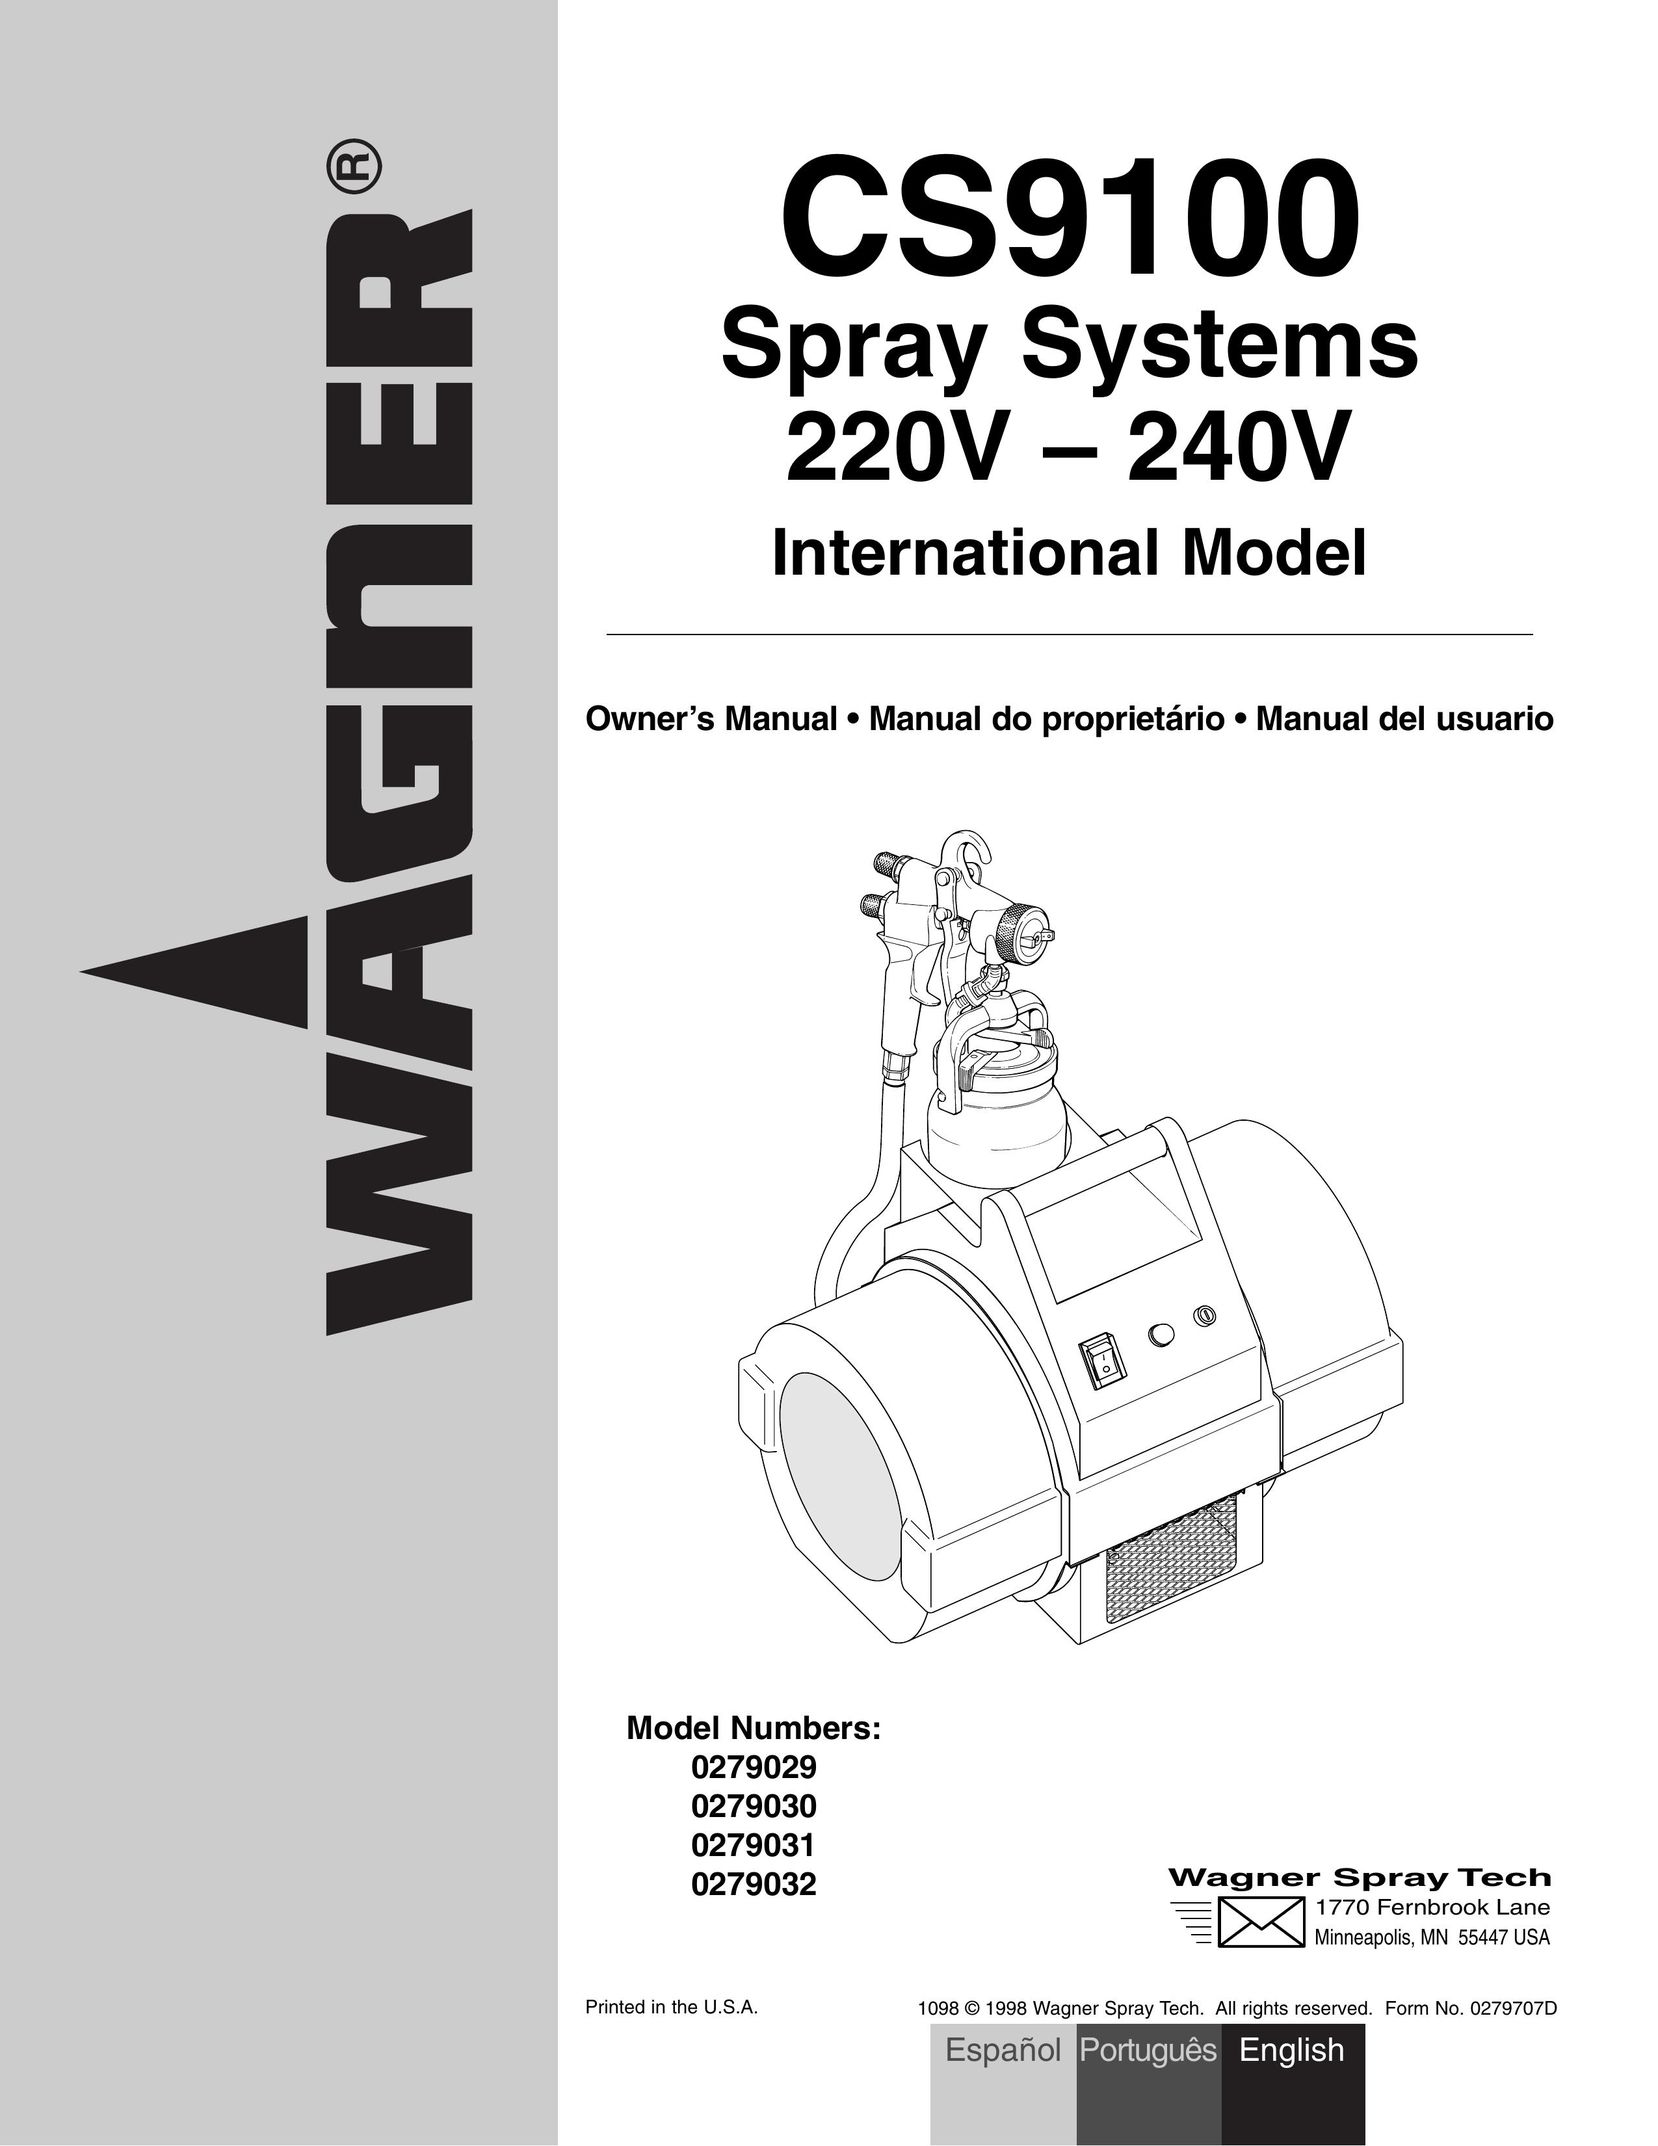 Wagner SprayTech 279030 Paint Sprayer User Manual